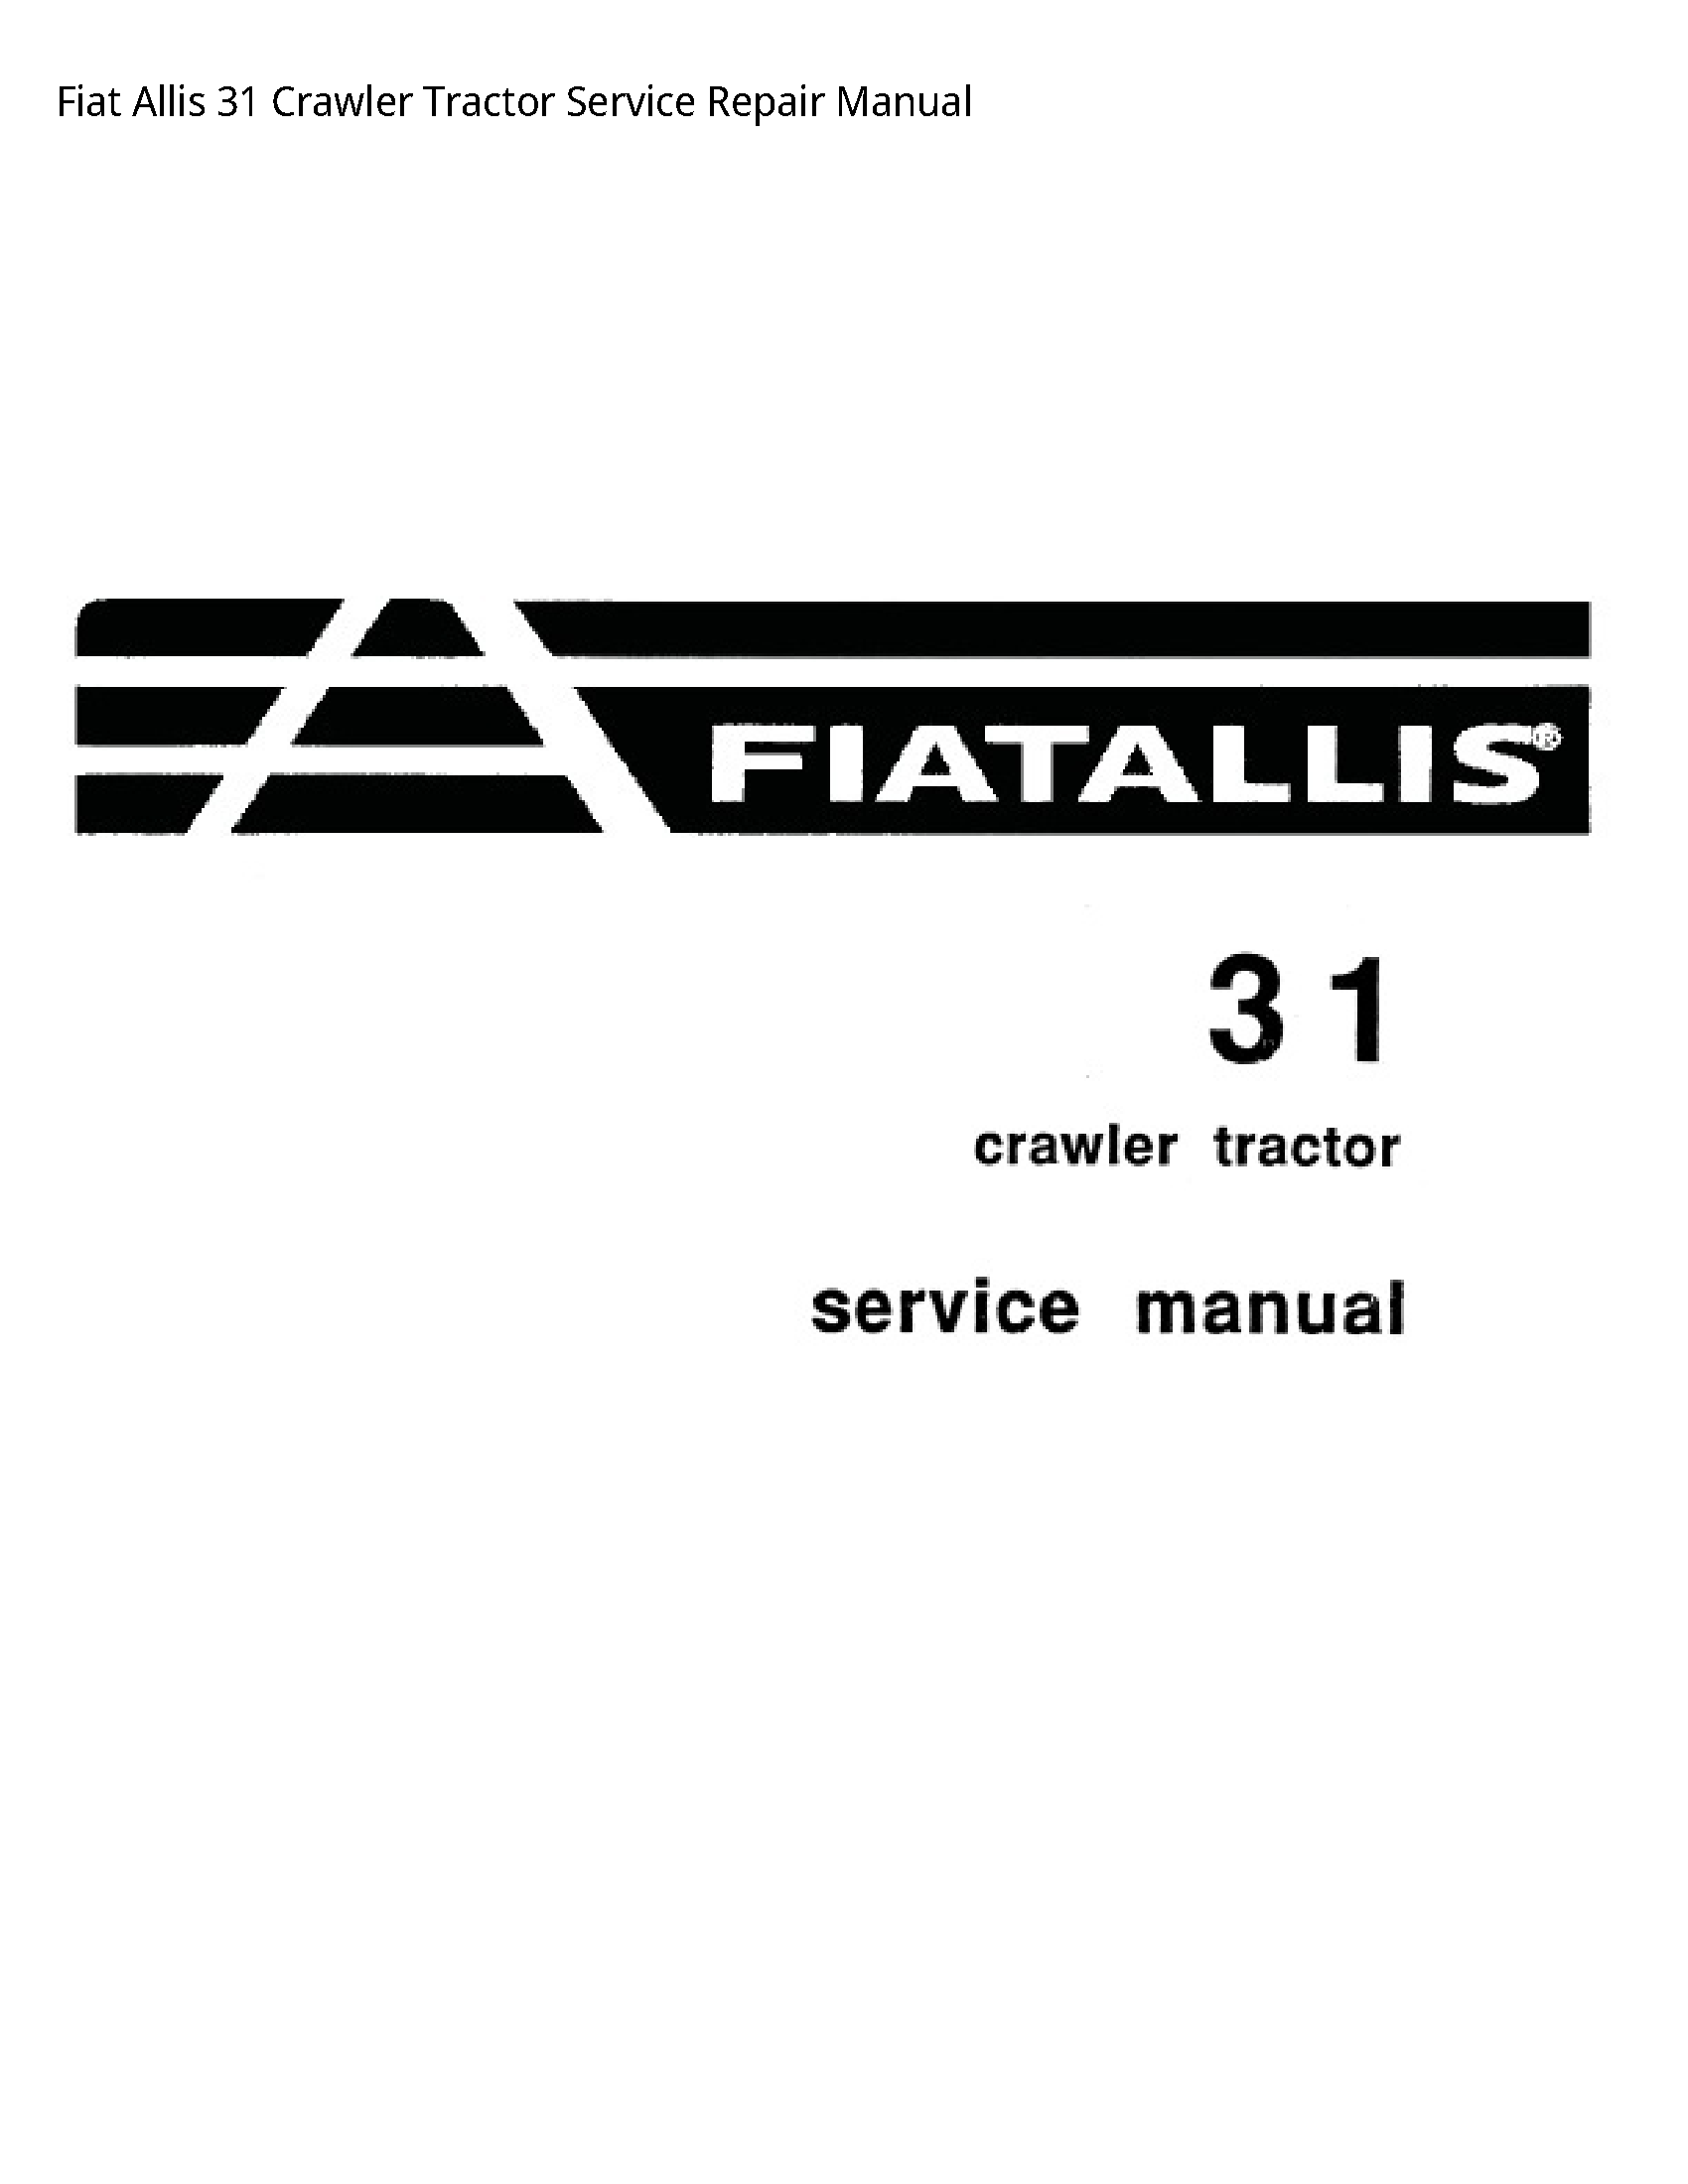 Fiat Allis 31 Crawler Tractor manual